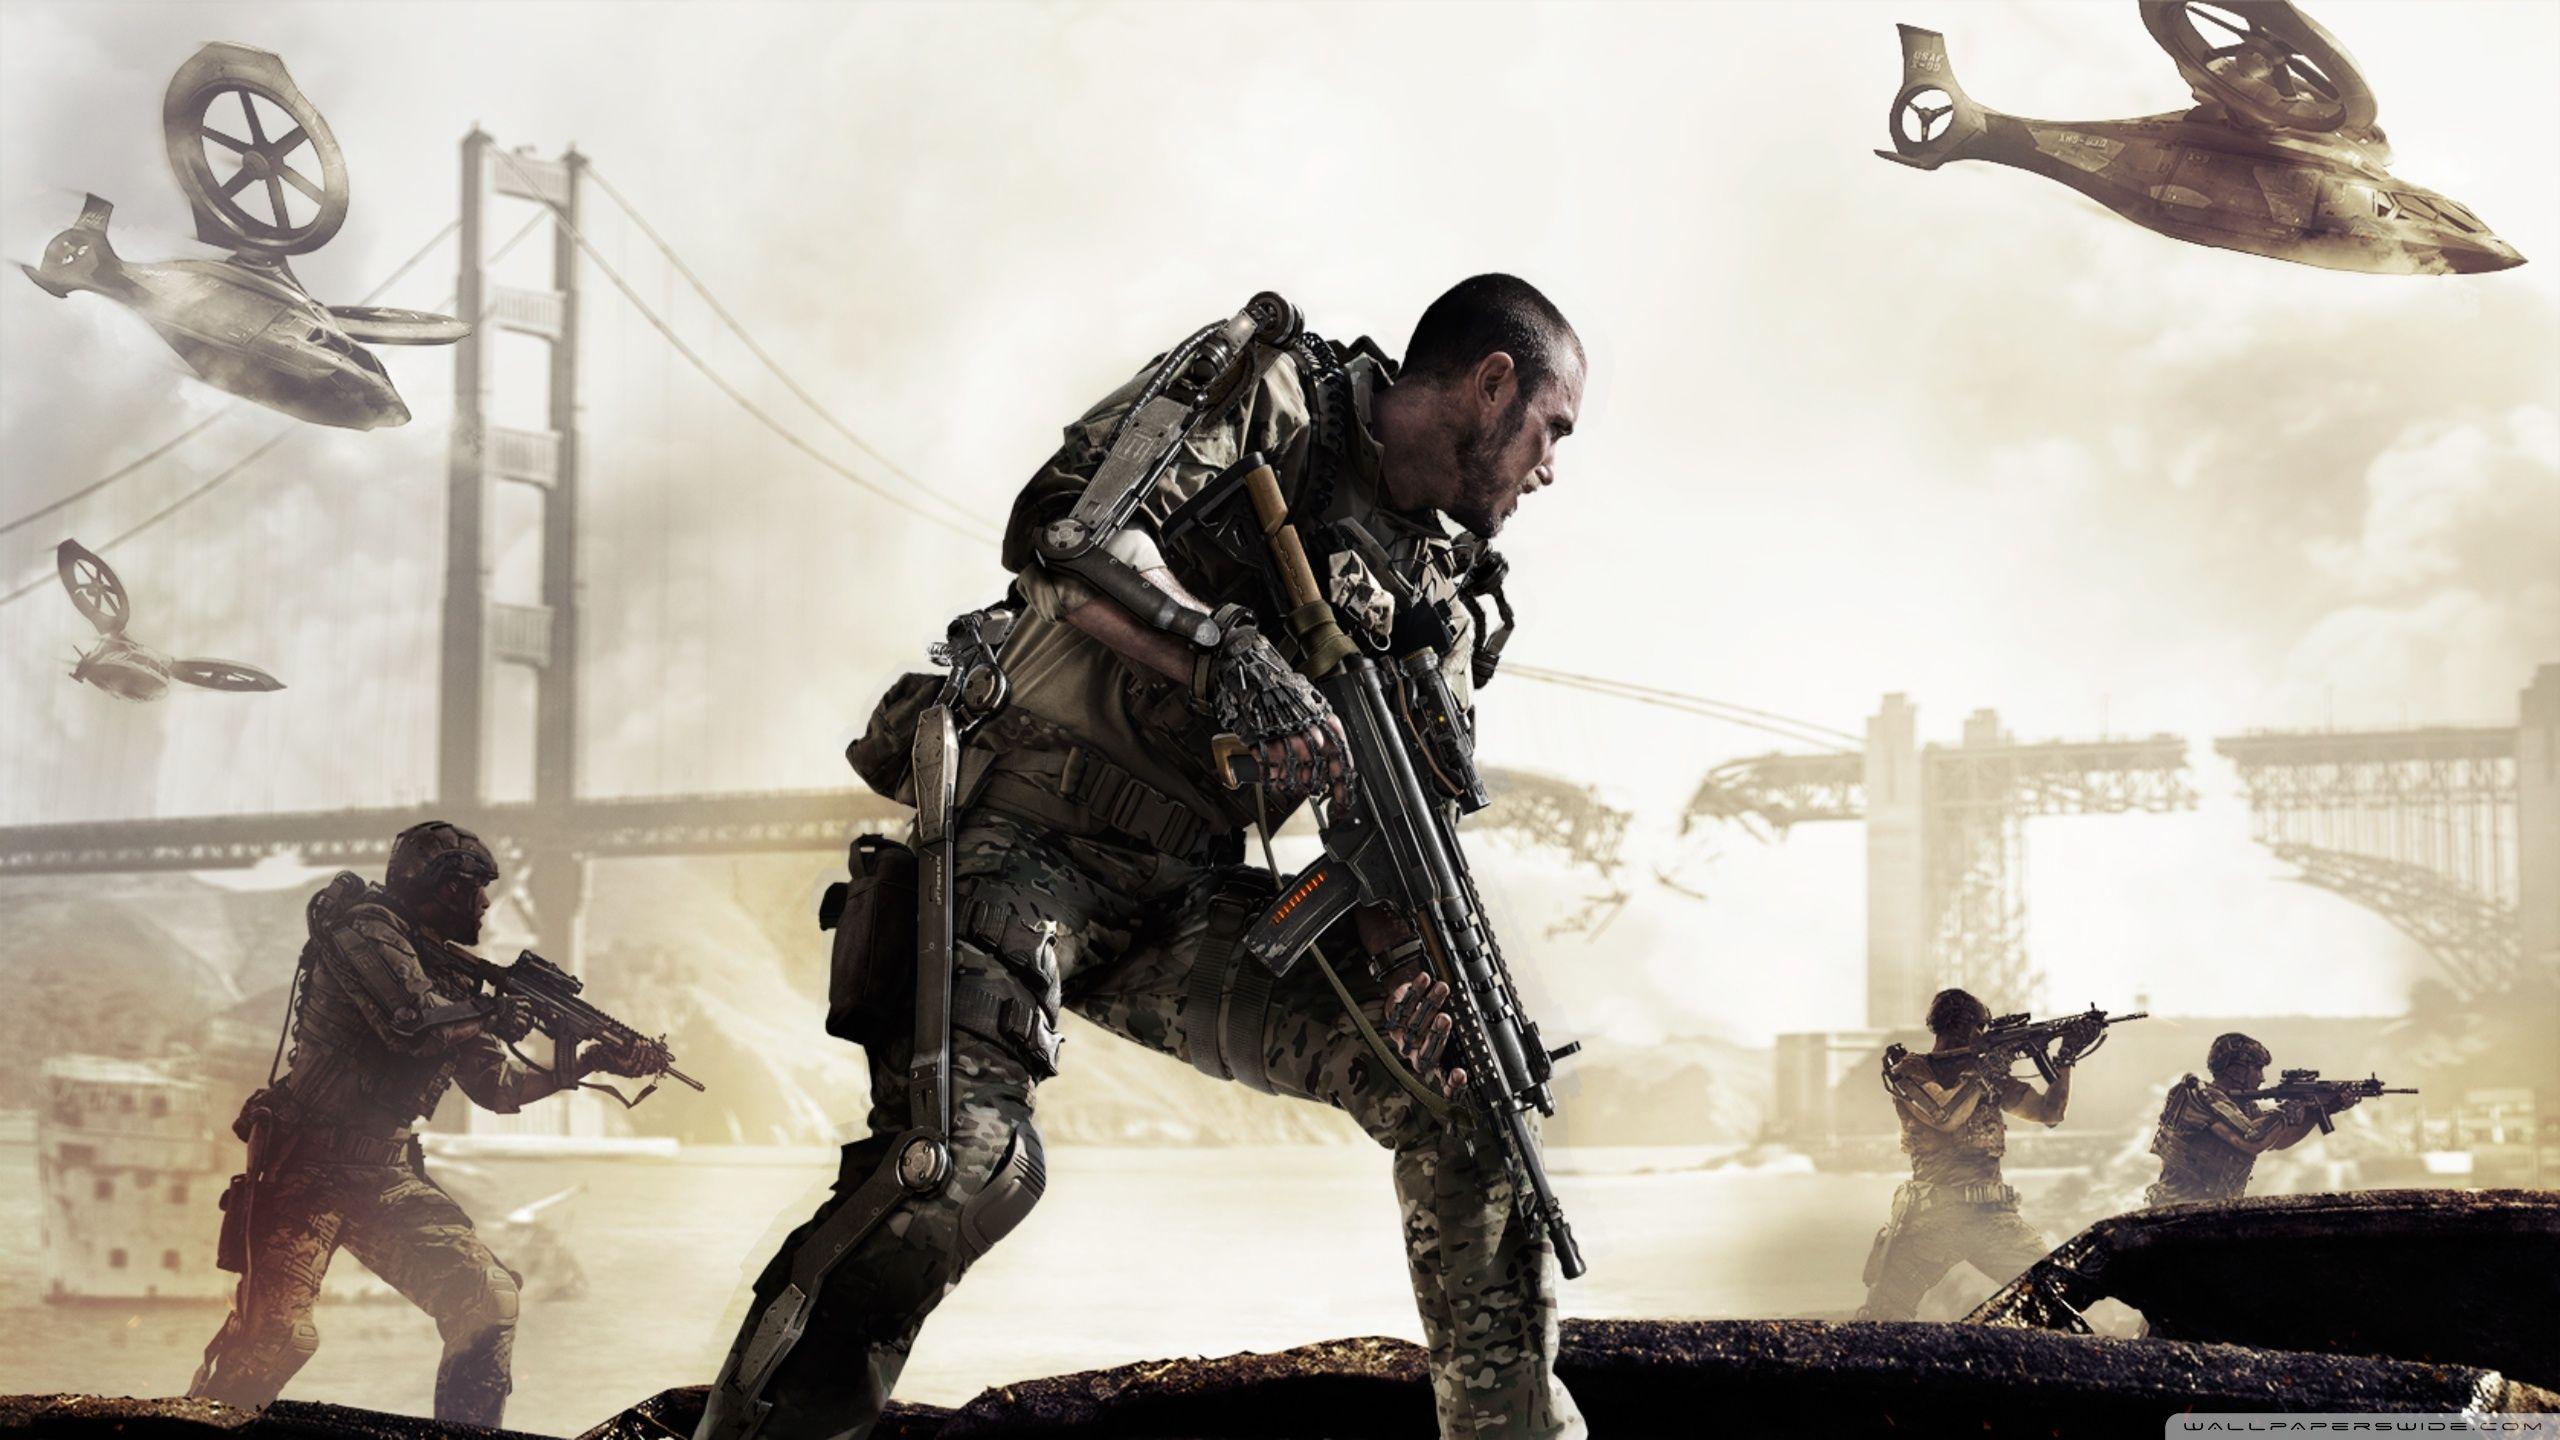 Call Of Duty: Advanced Warfare HD Wallpapers - Wallpaper Cave